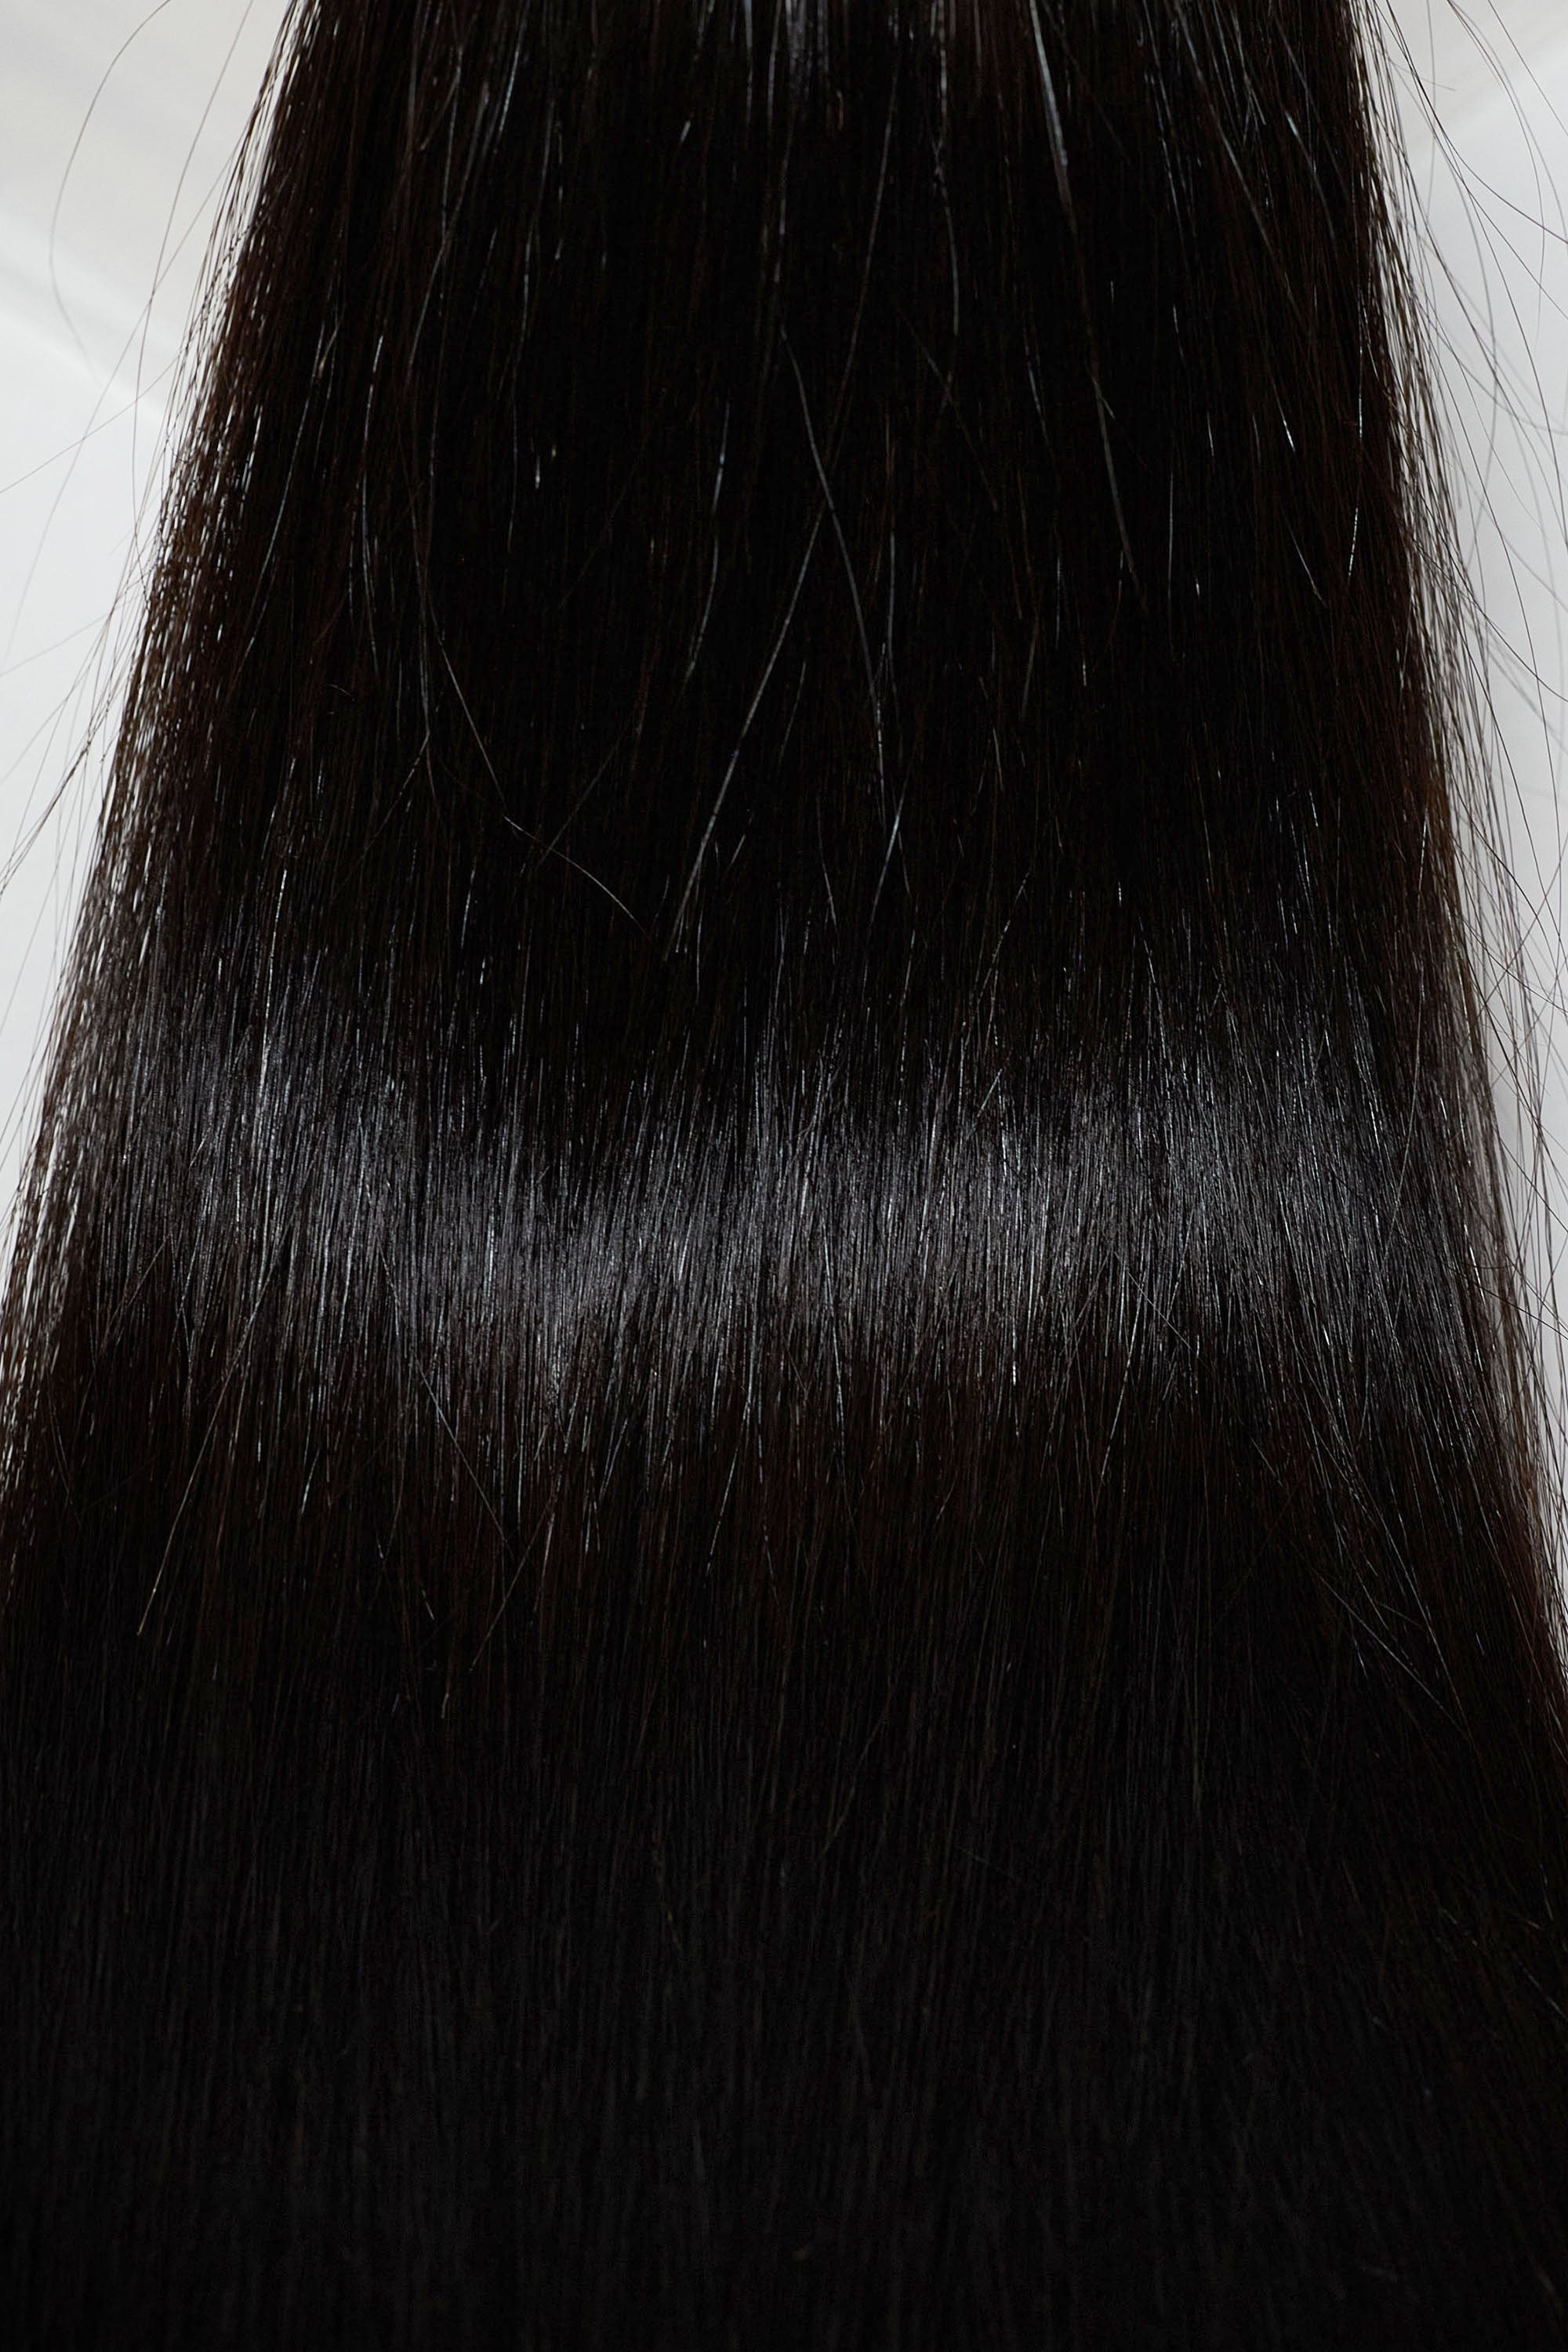 Behair professional Keratin Tip "Premium" 18" (45cm) Natural Straight Jet Black #1 - 25g (Standart - 0.7g each pcs) hair extensions